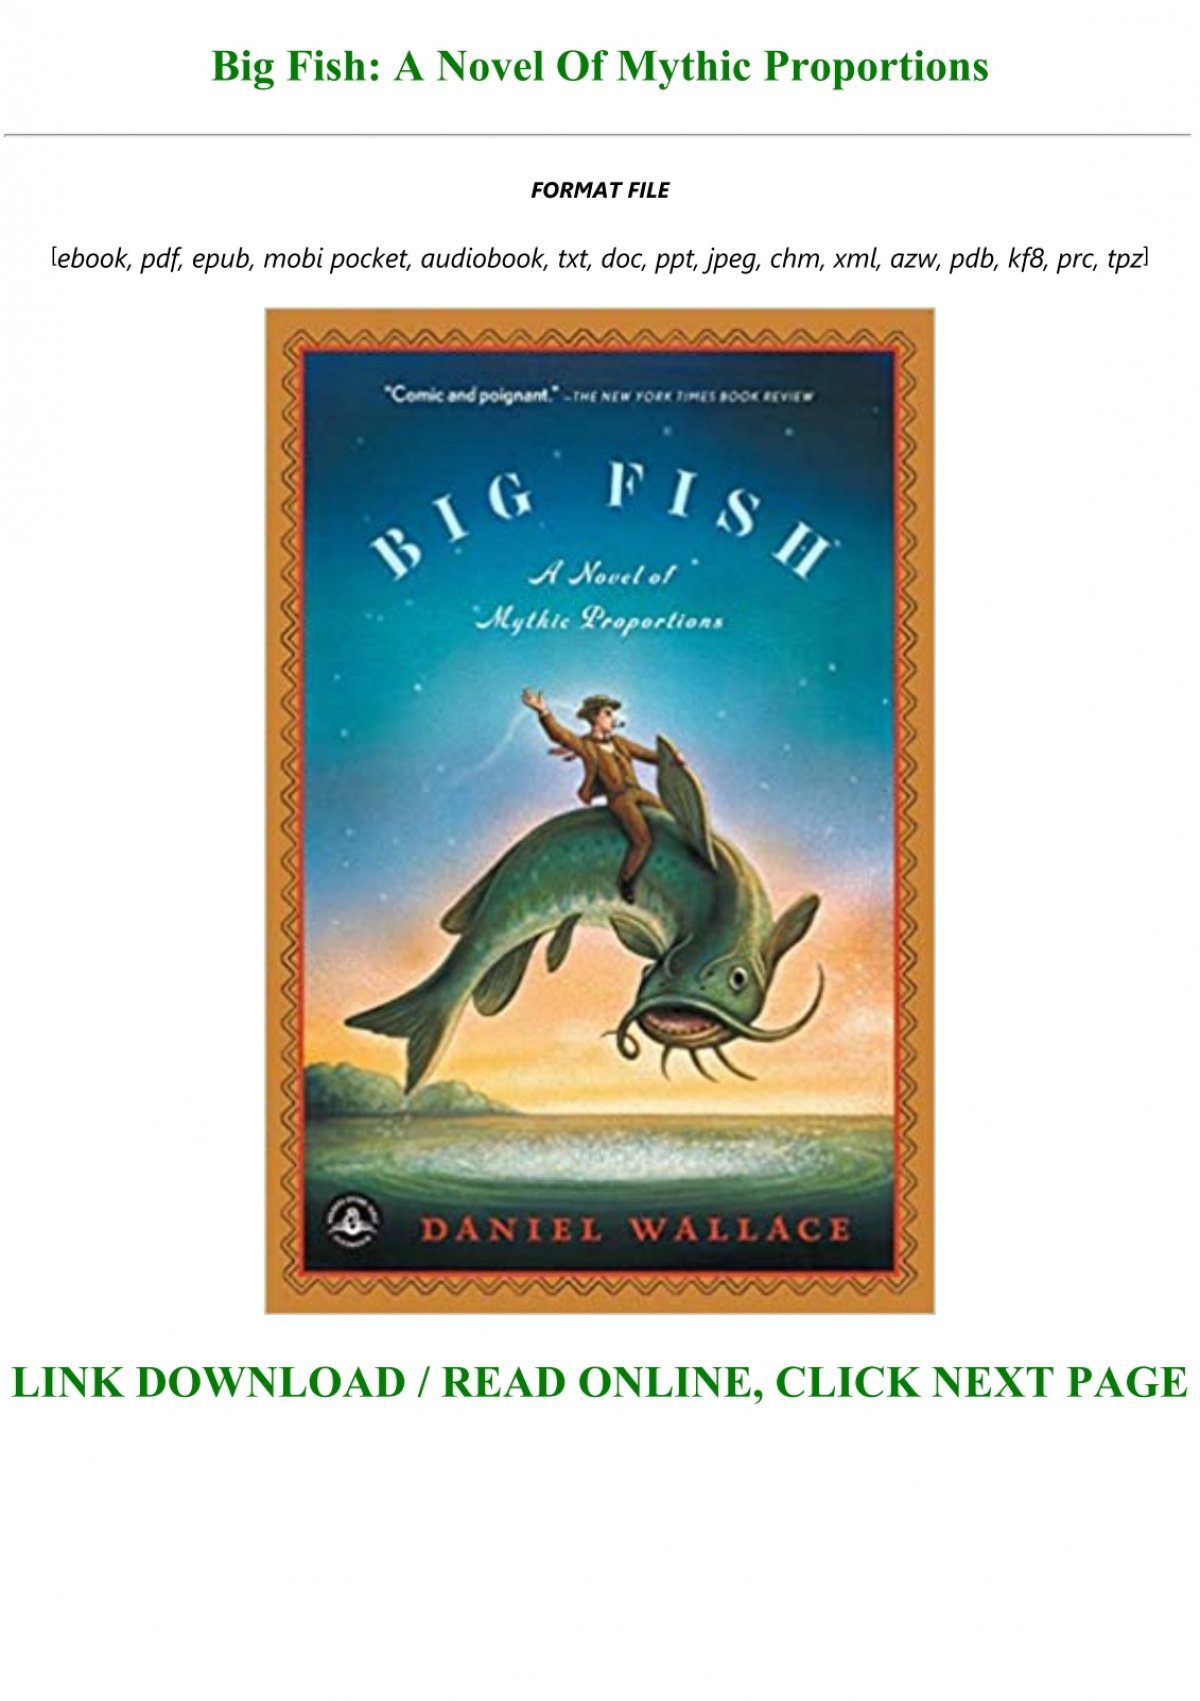 Big Fish by Daniel Wallace - Audiobook 